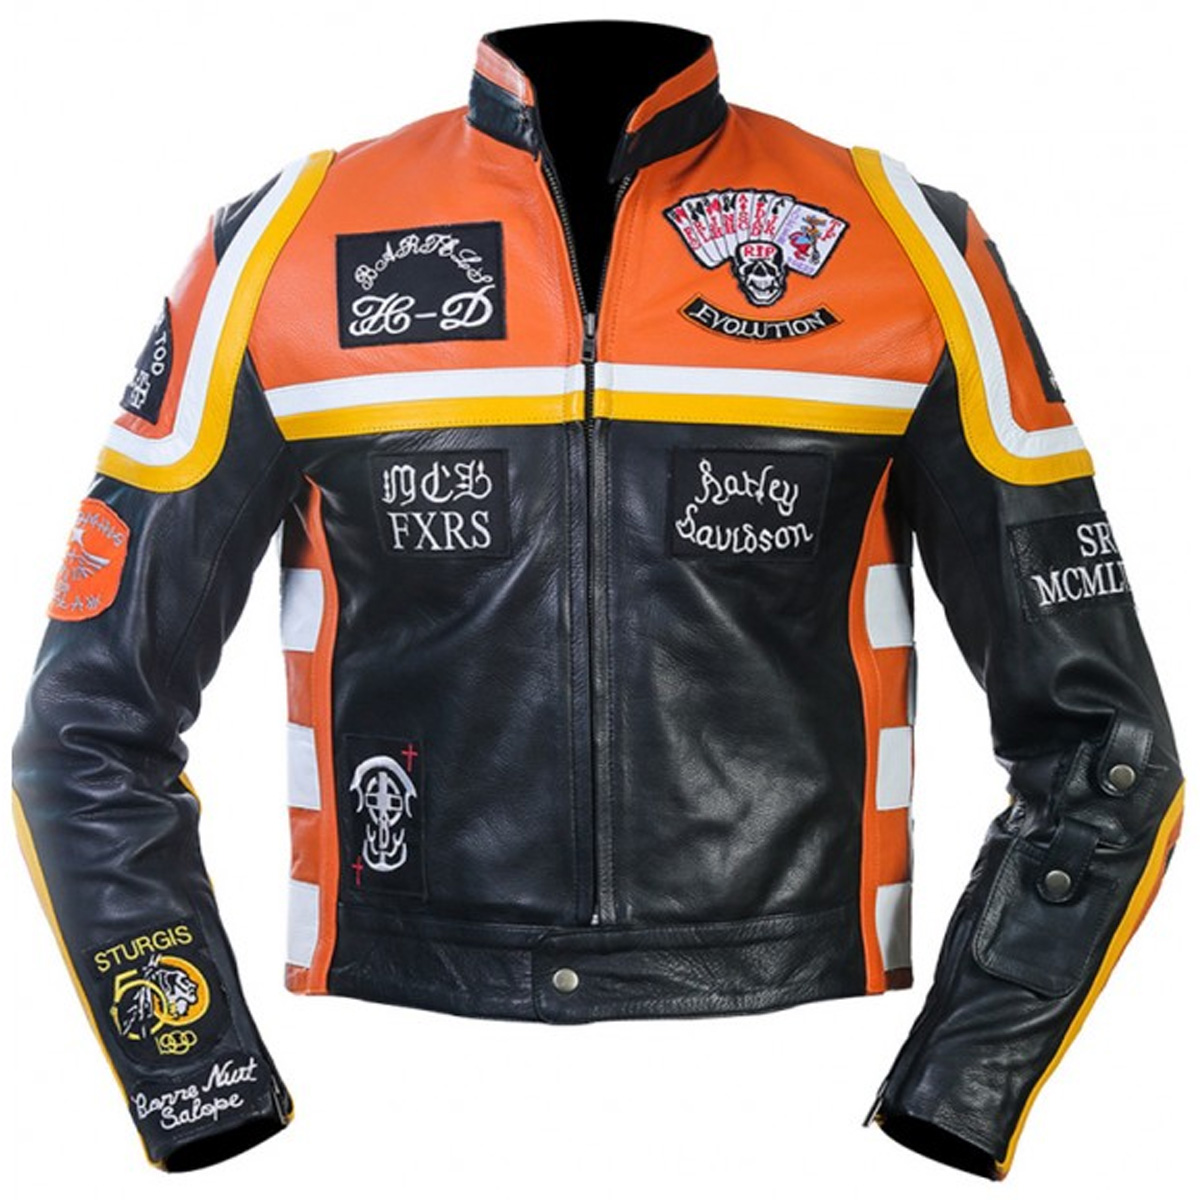 Harley Davidson And Marlboro Man Mickey Rourke Leather Pant